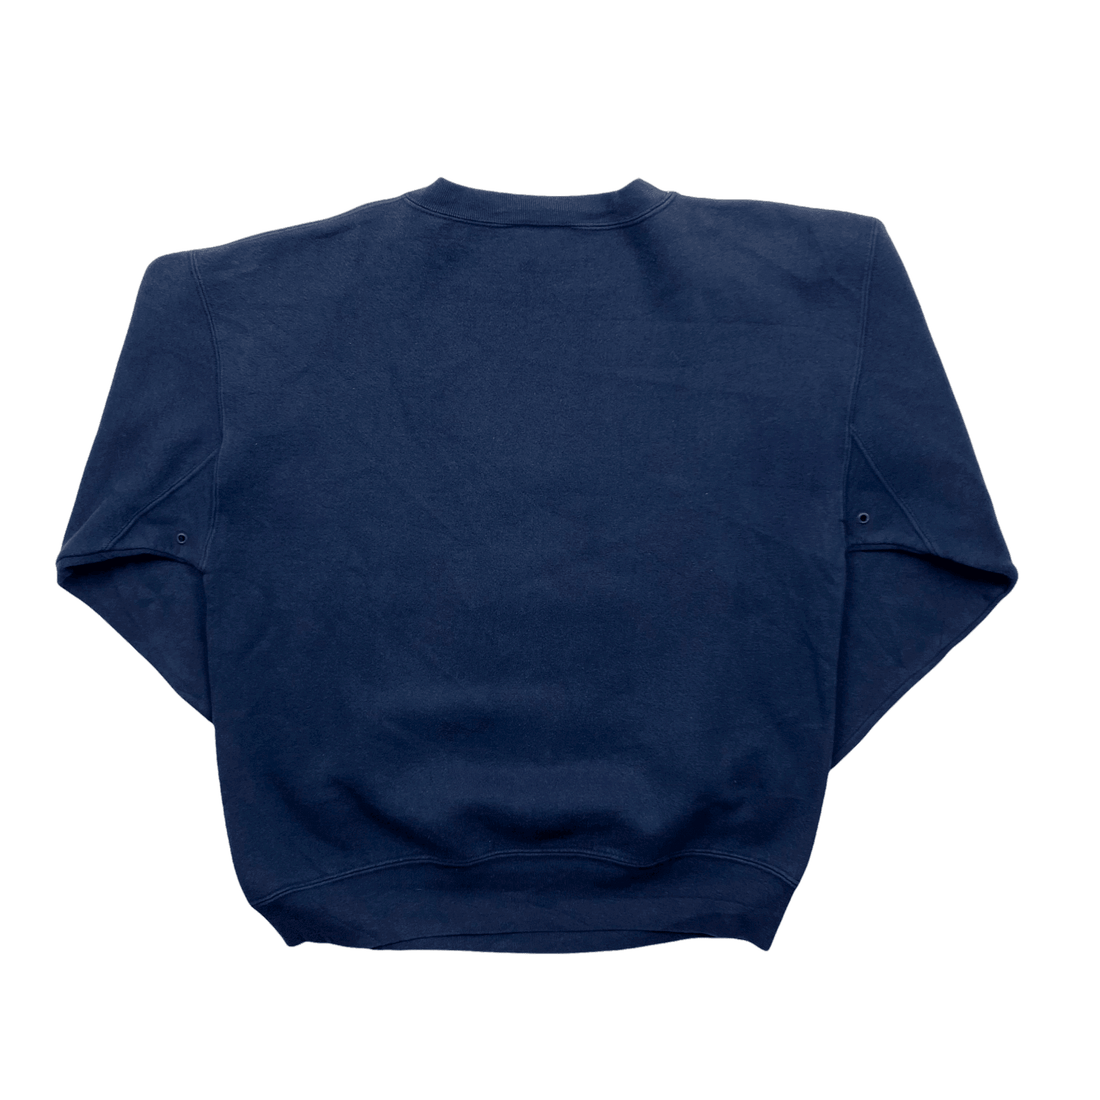 Vintage 90s Navy Blue Timberland Spell-Out Sweatshirt - Medium - The Streetwear Studio